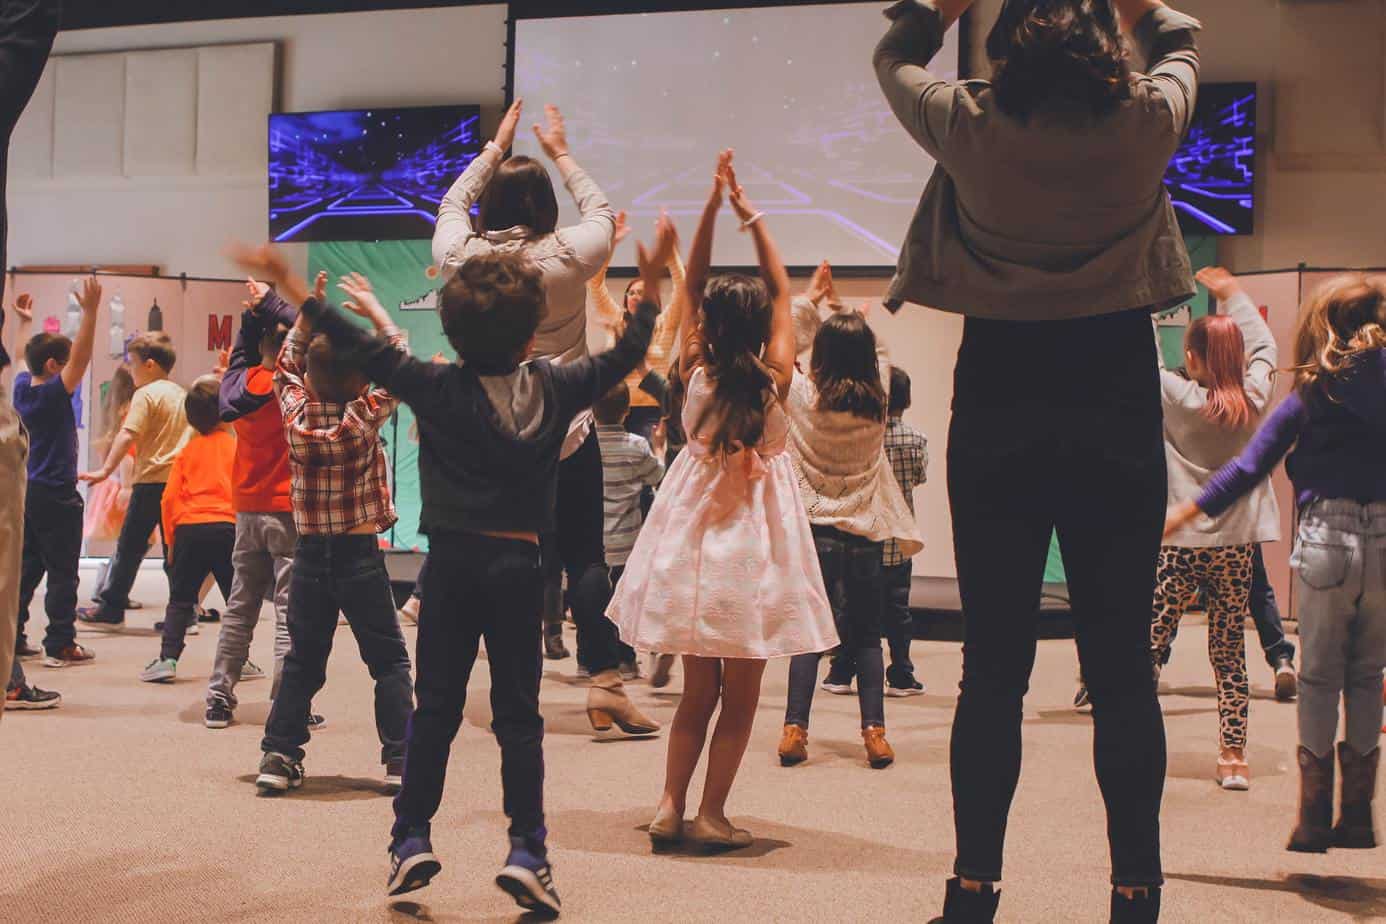 How Do Children's Ministries Work In Churches?